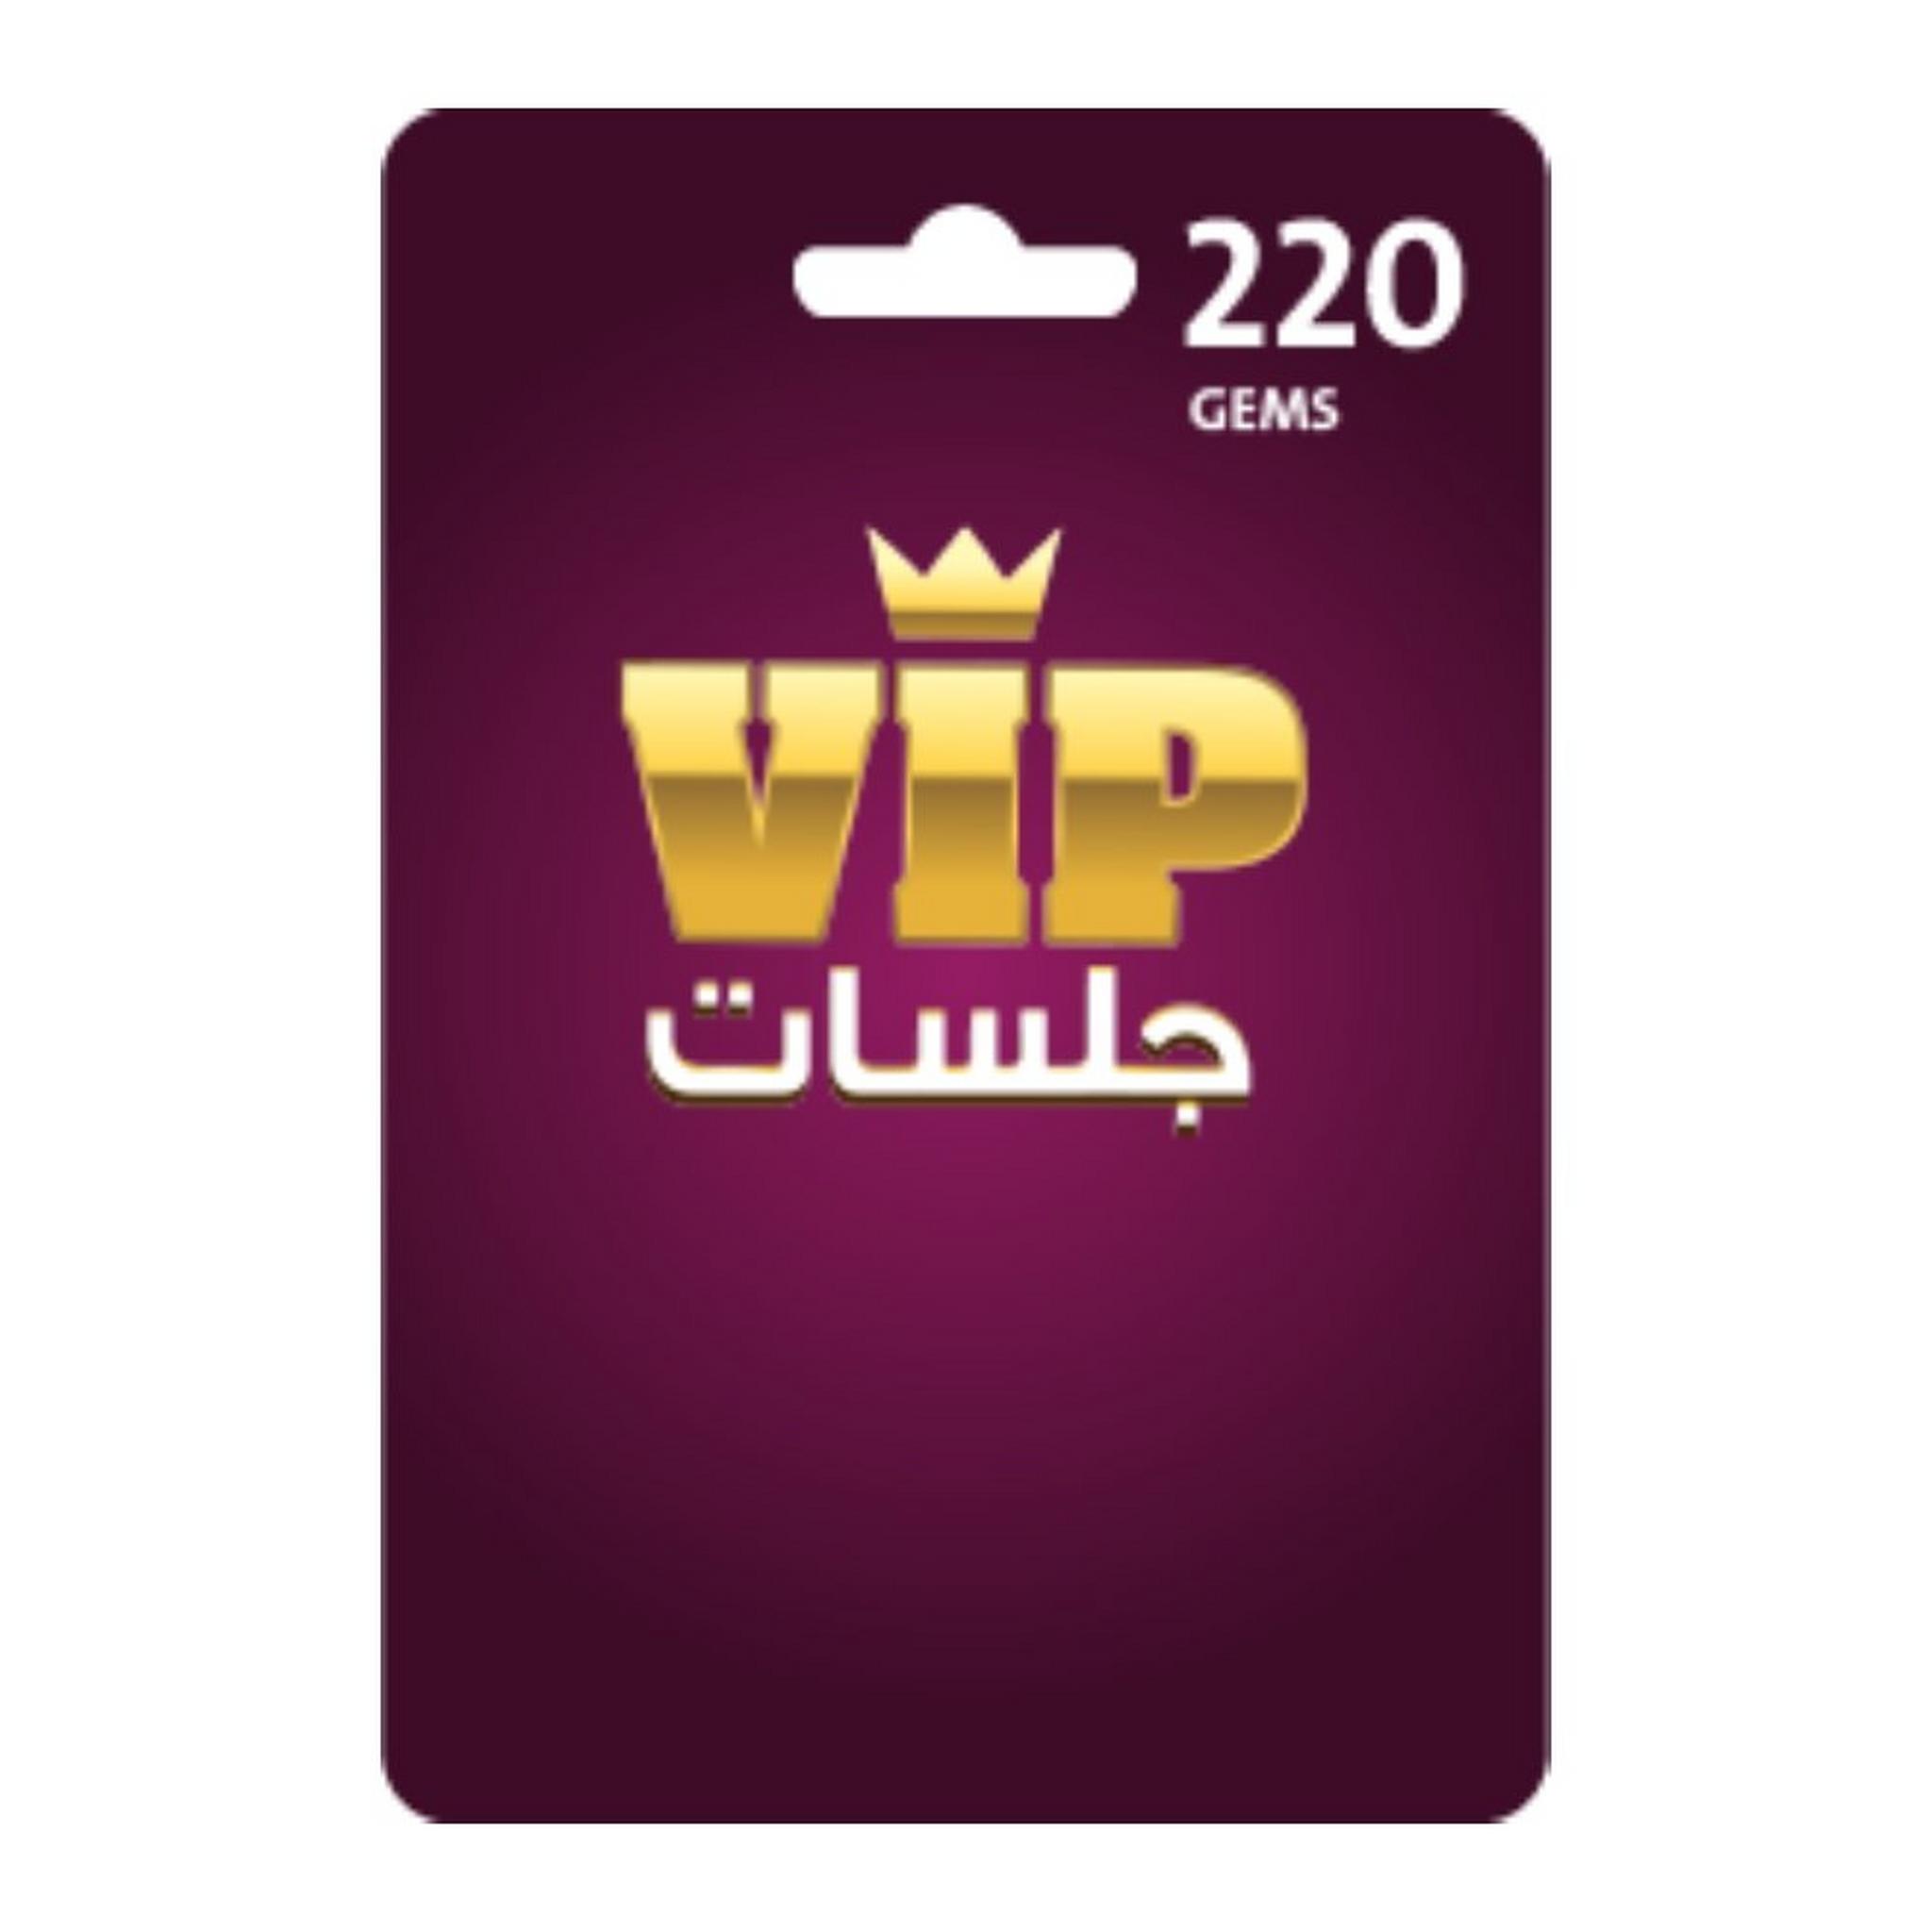 VIP Jalsat  220 Gems